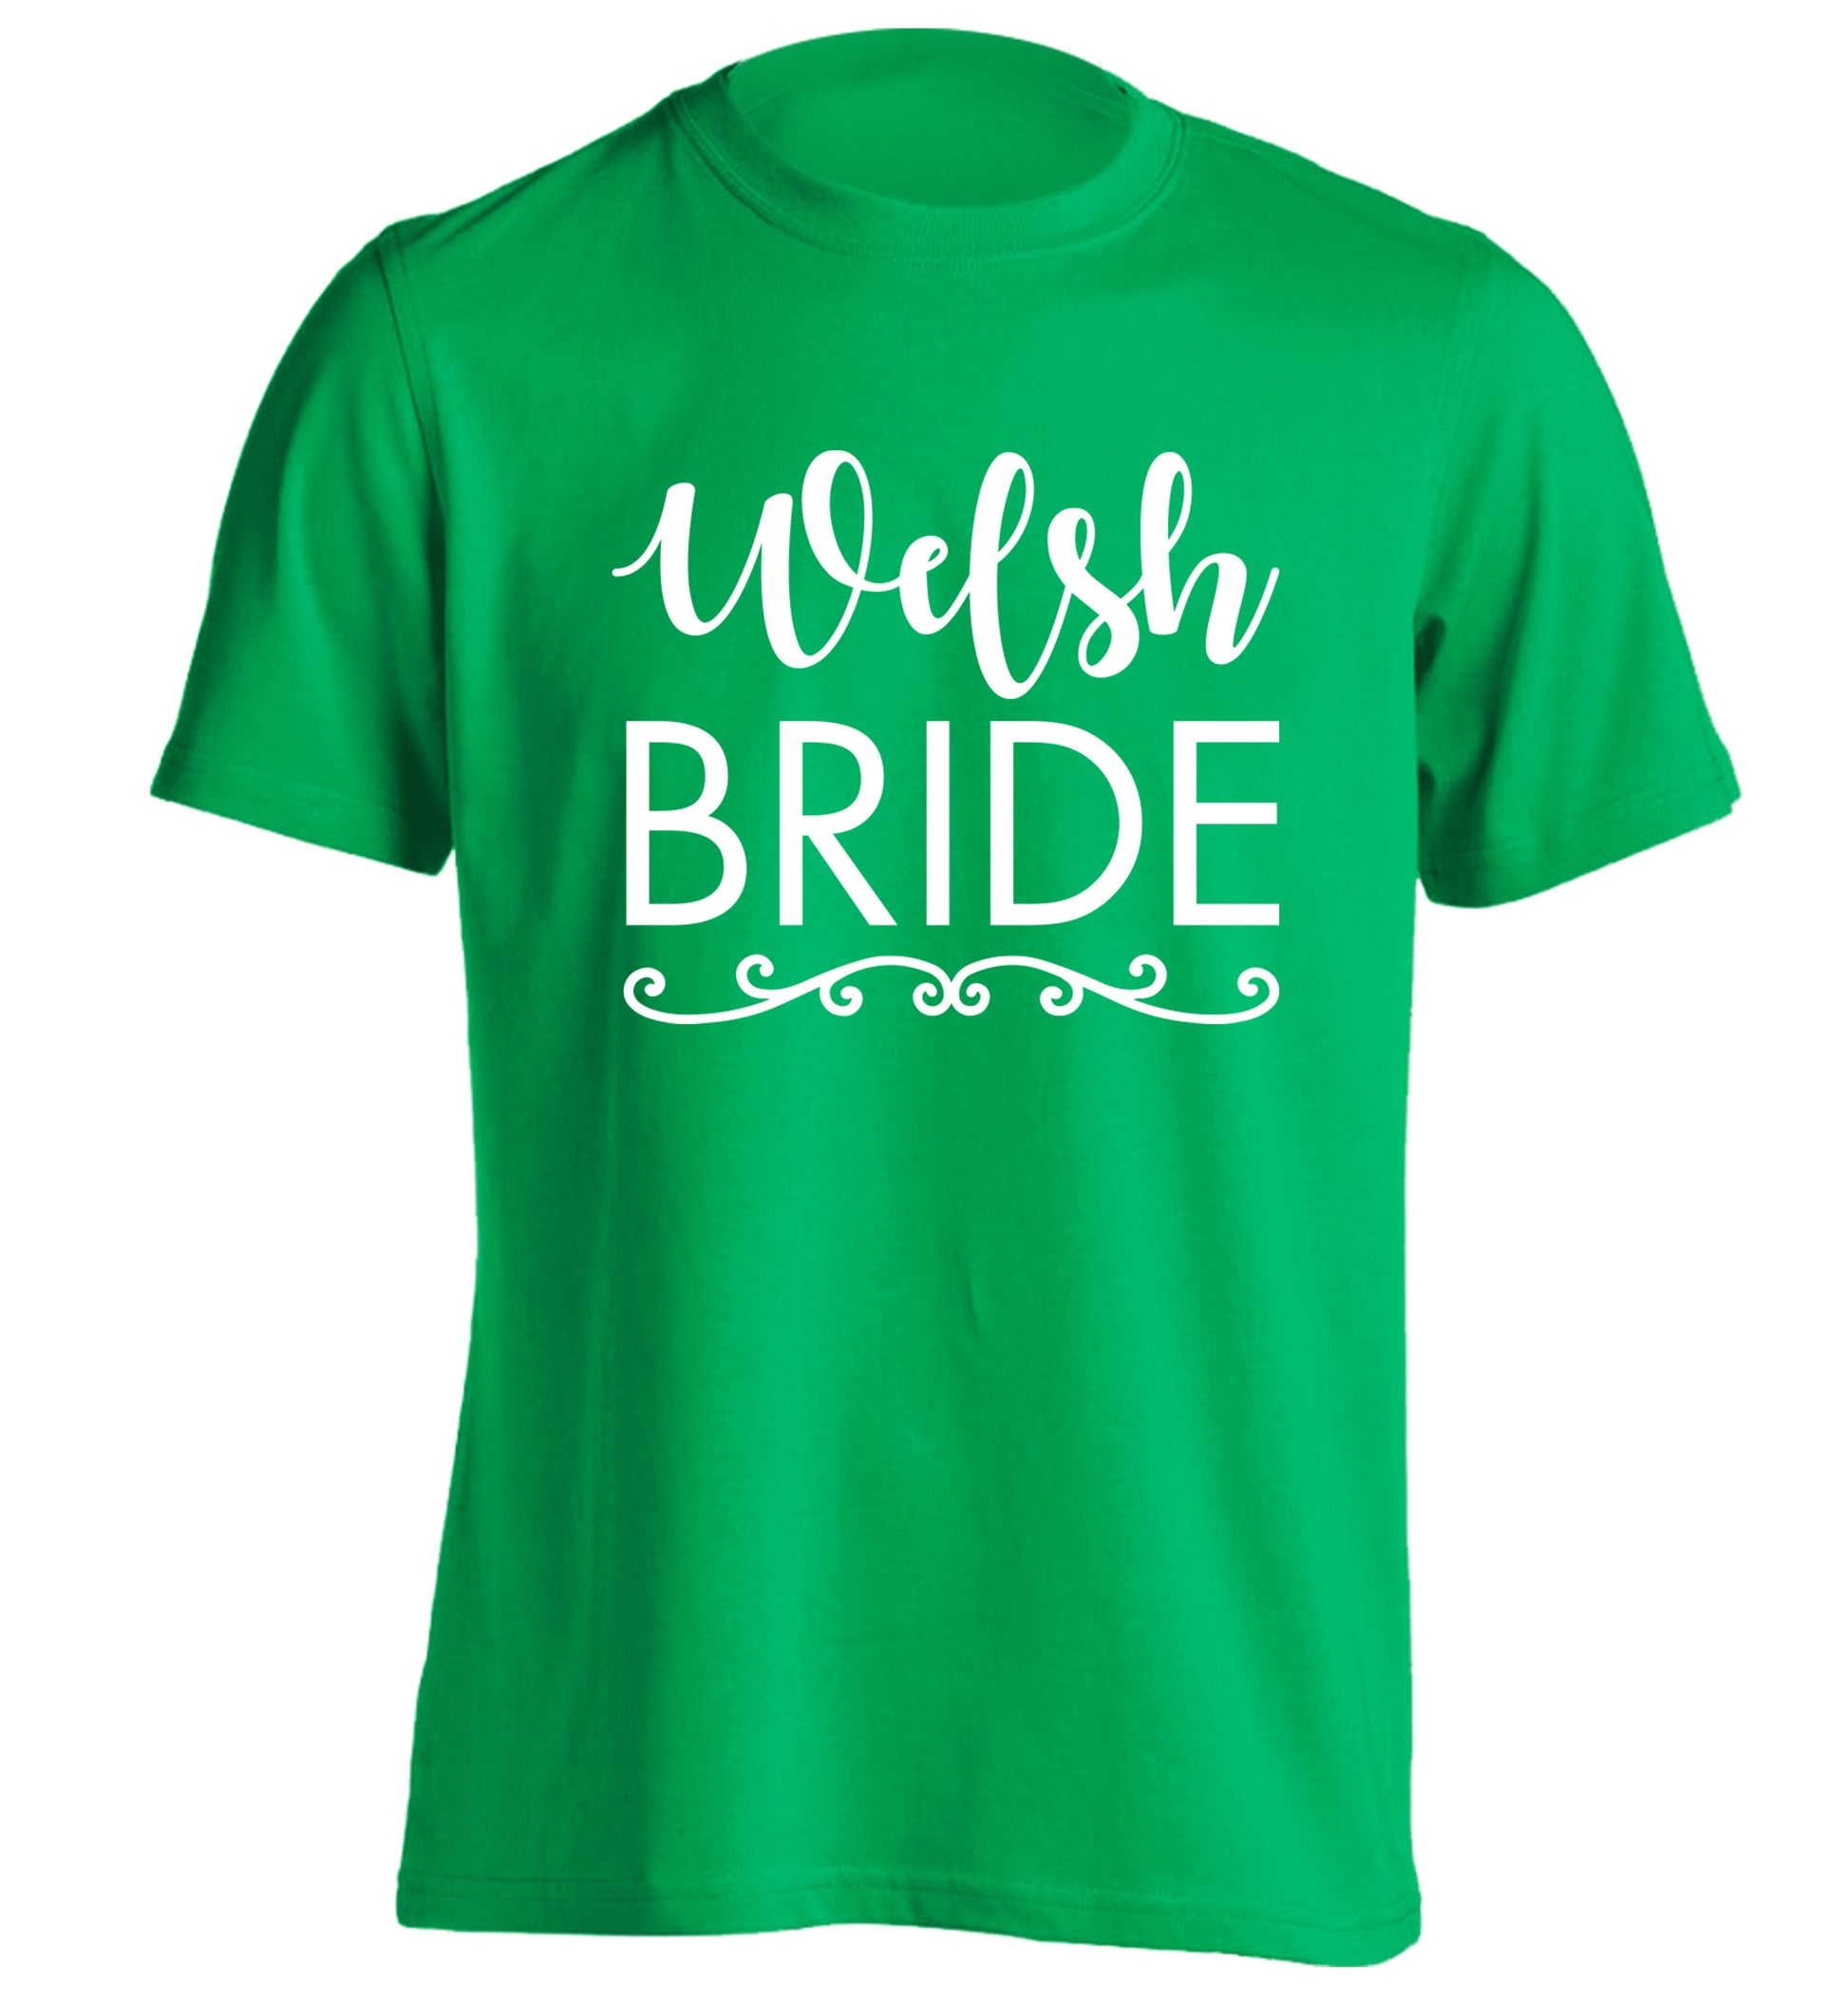 Welsh Bride adults unisex green Tshirt 2XL